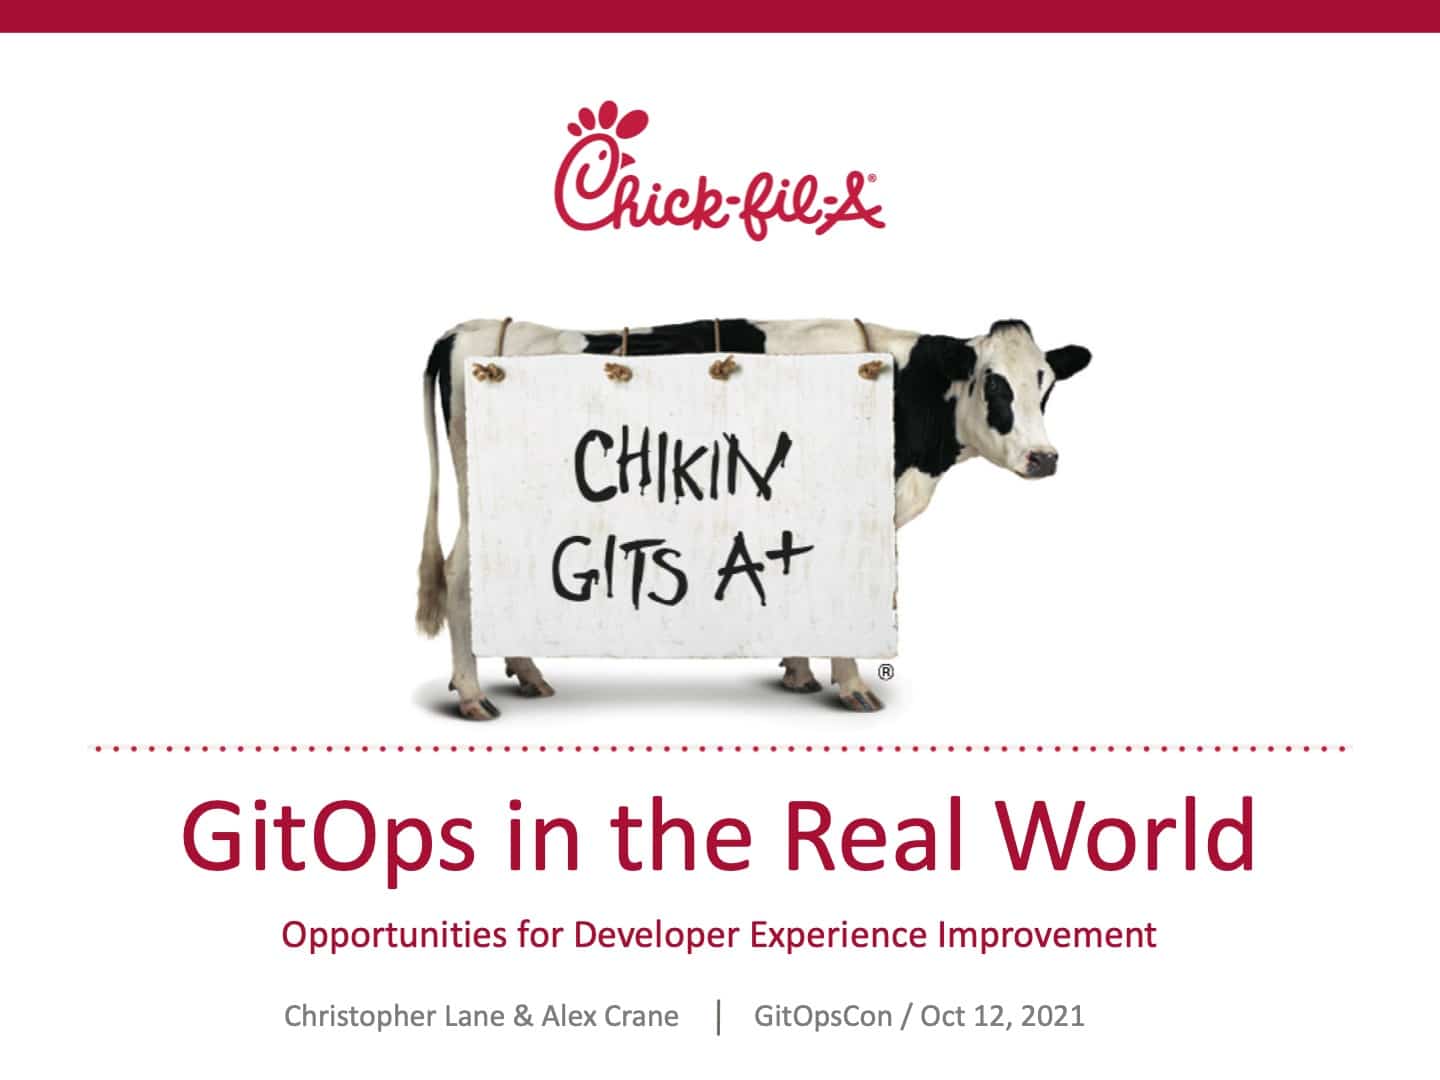 Chick-fil-a kubernetes gitops - Speedscale API Testing